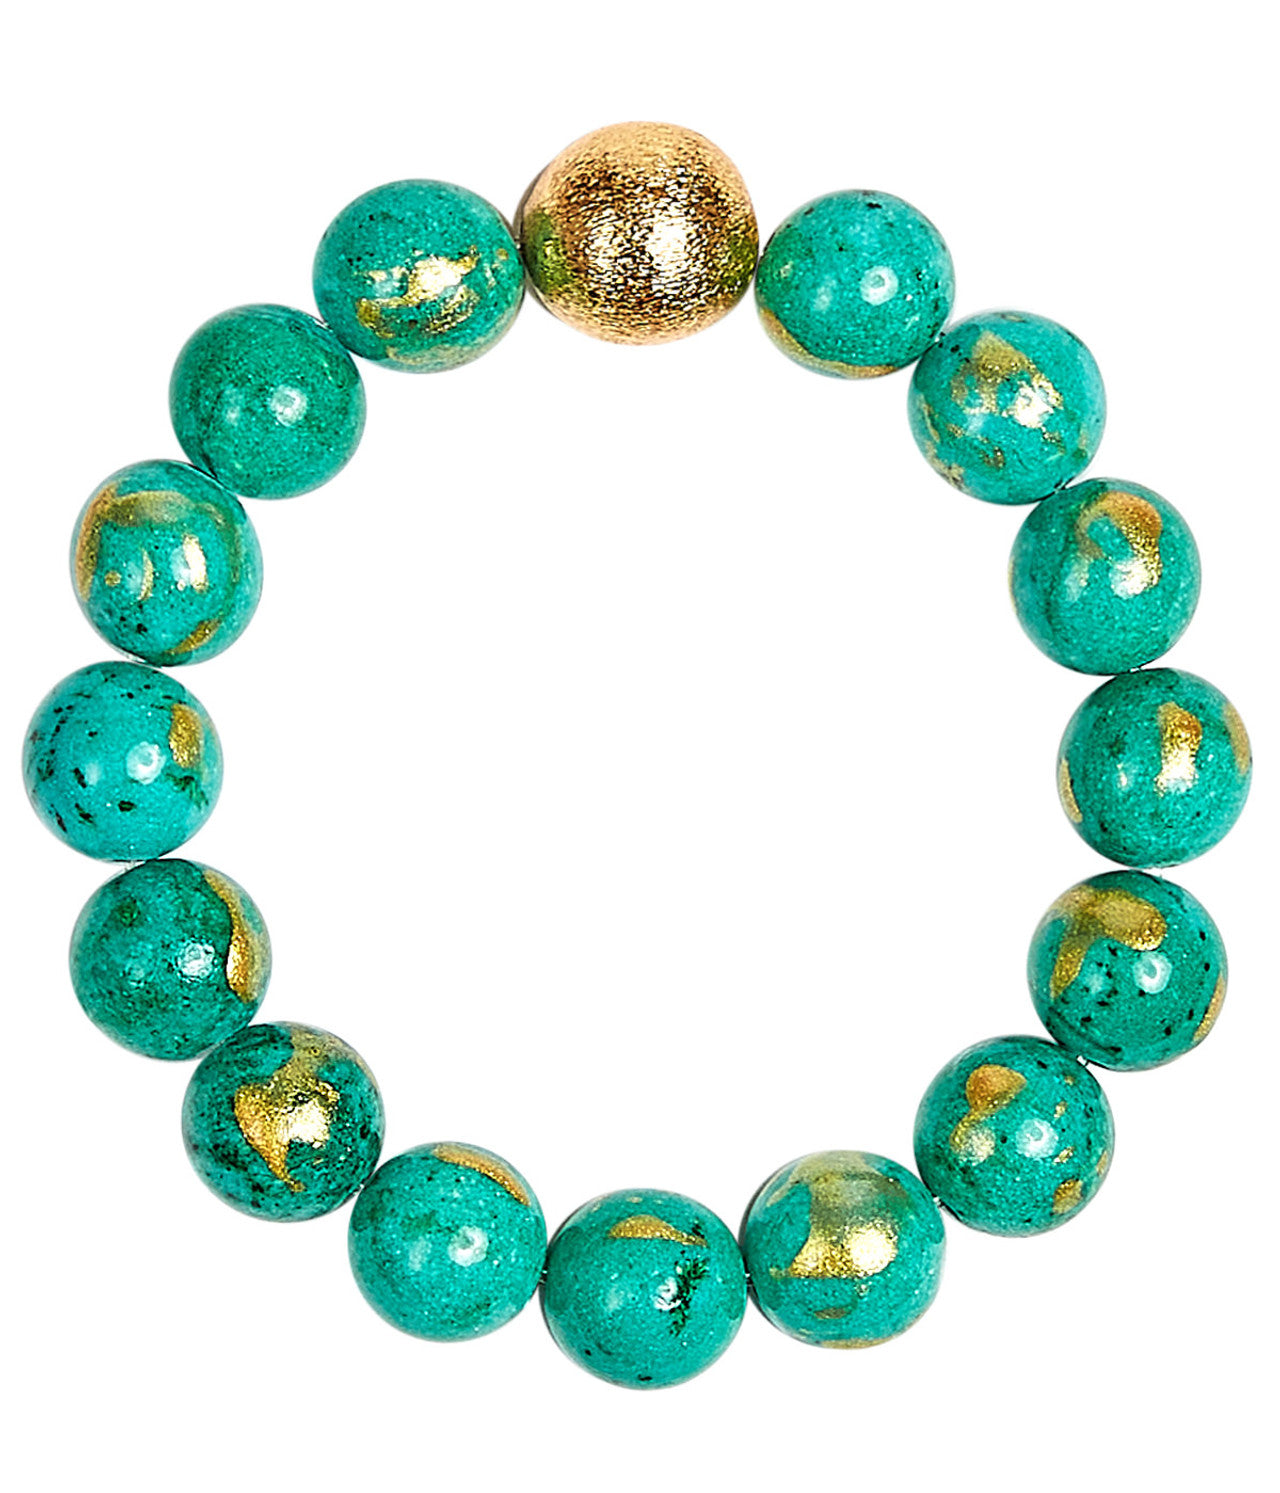 Georgia Gilded Turquoise Bracelet 14mm